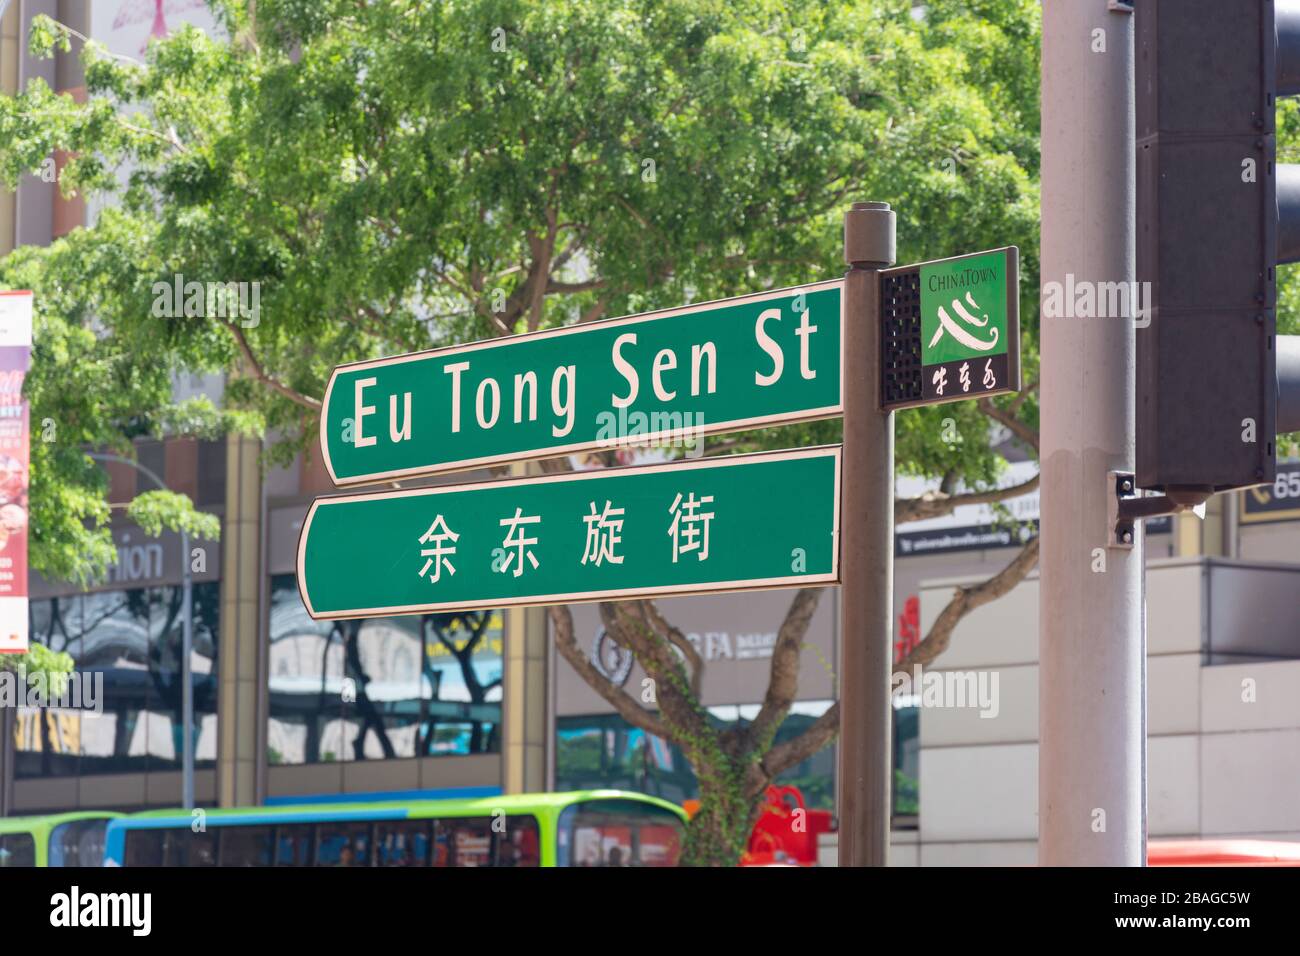 Letrero de calle inglés y chino, EU Tong Sen Street, Chinatown, República de Singapur Foto de stock